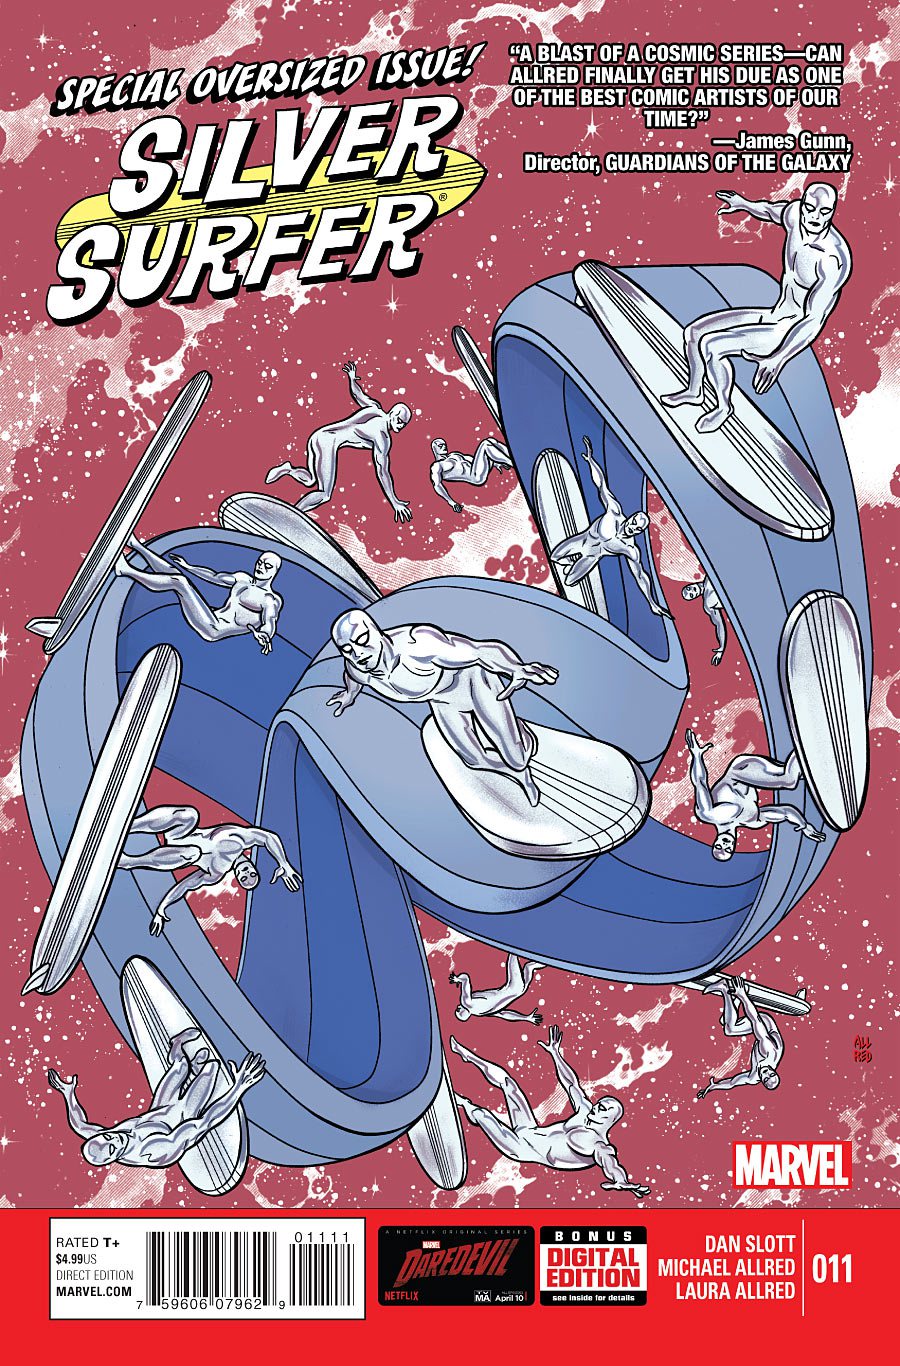 Silver Surfer cover